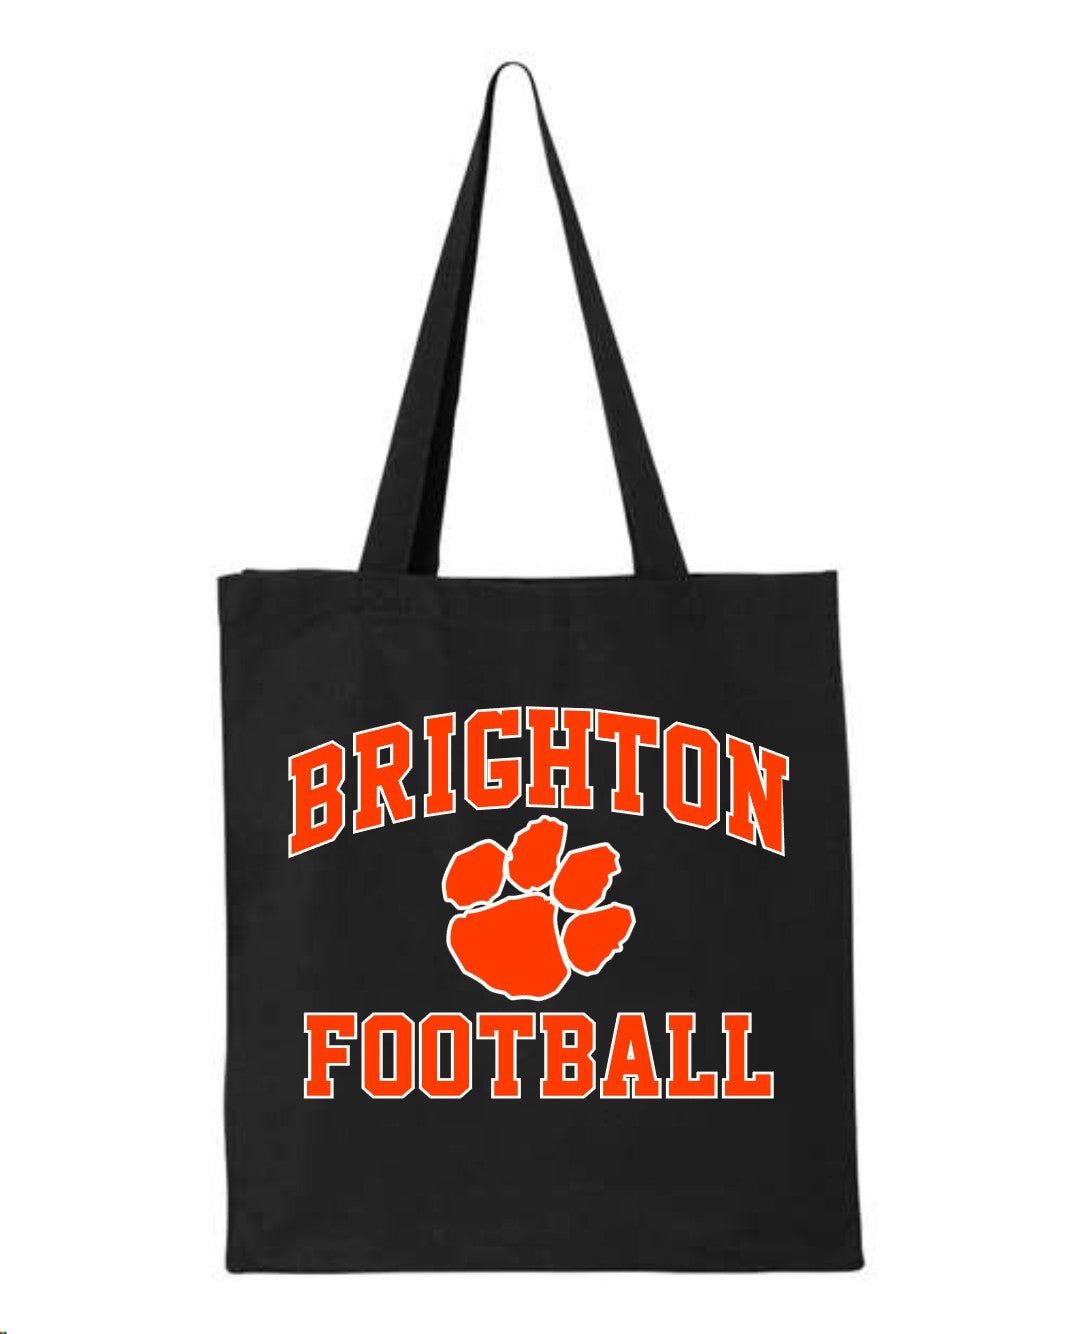 Brighton Football Tote Bag